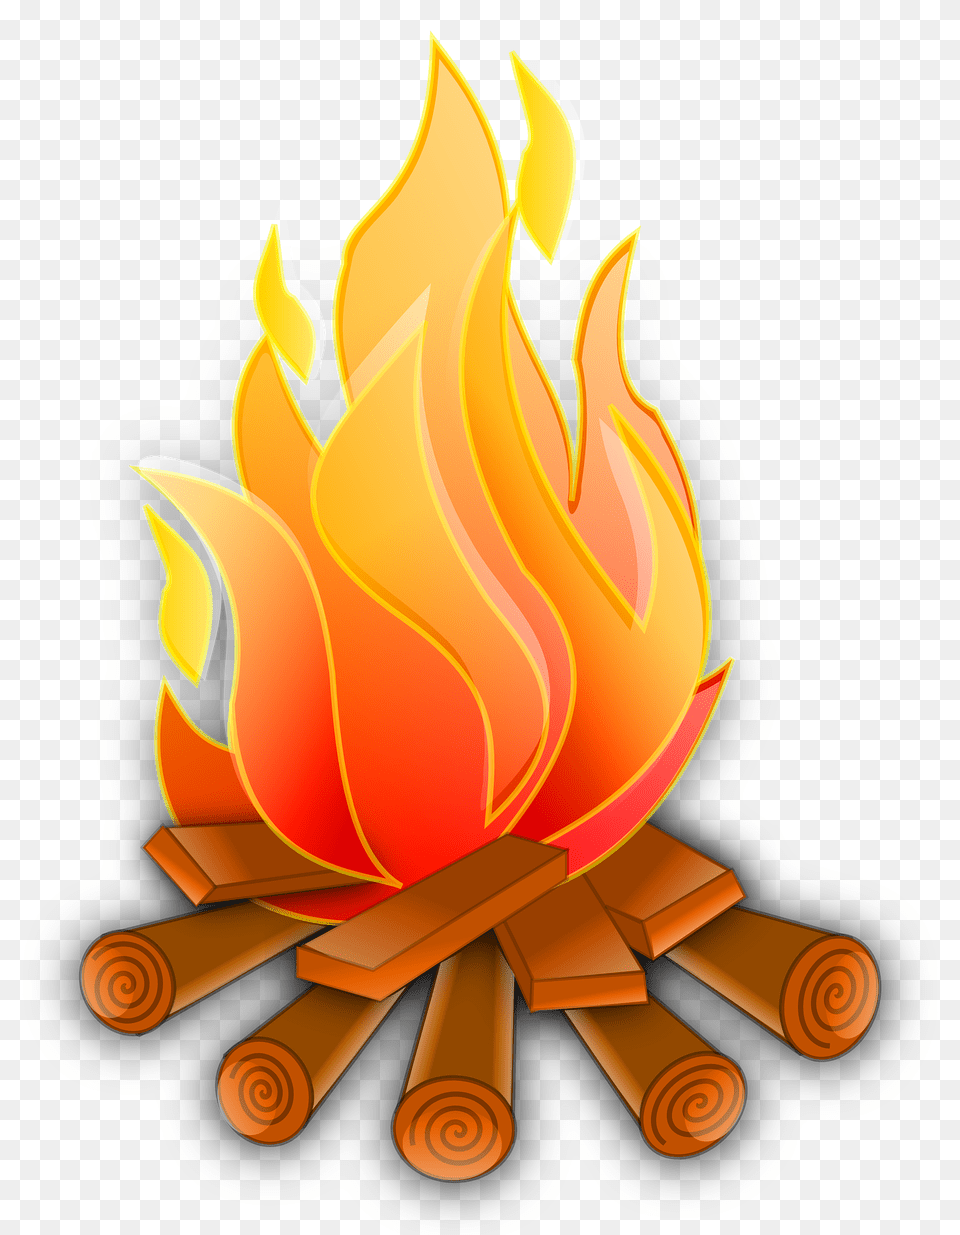 Pngpix Com Campfire Vector Image, Fire, Flame, Bonfire, Bulldozer Free Transparent Png